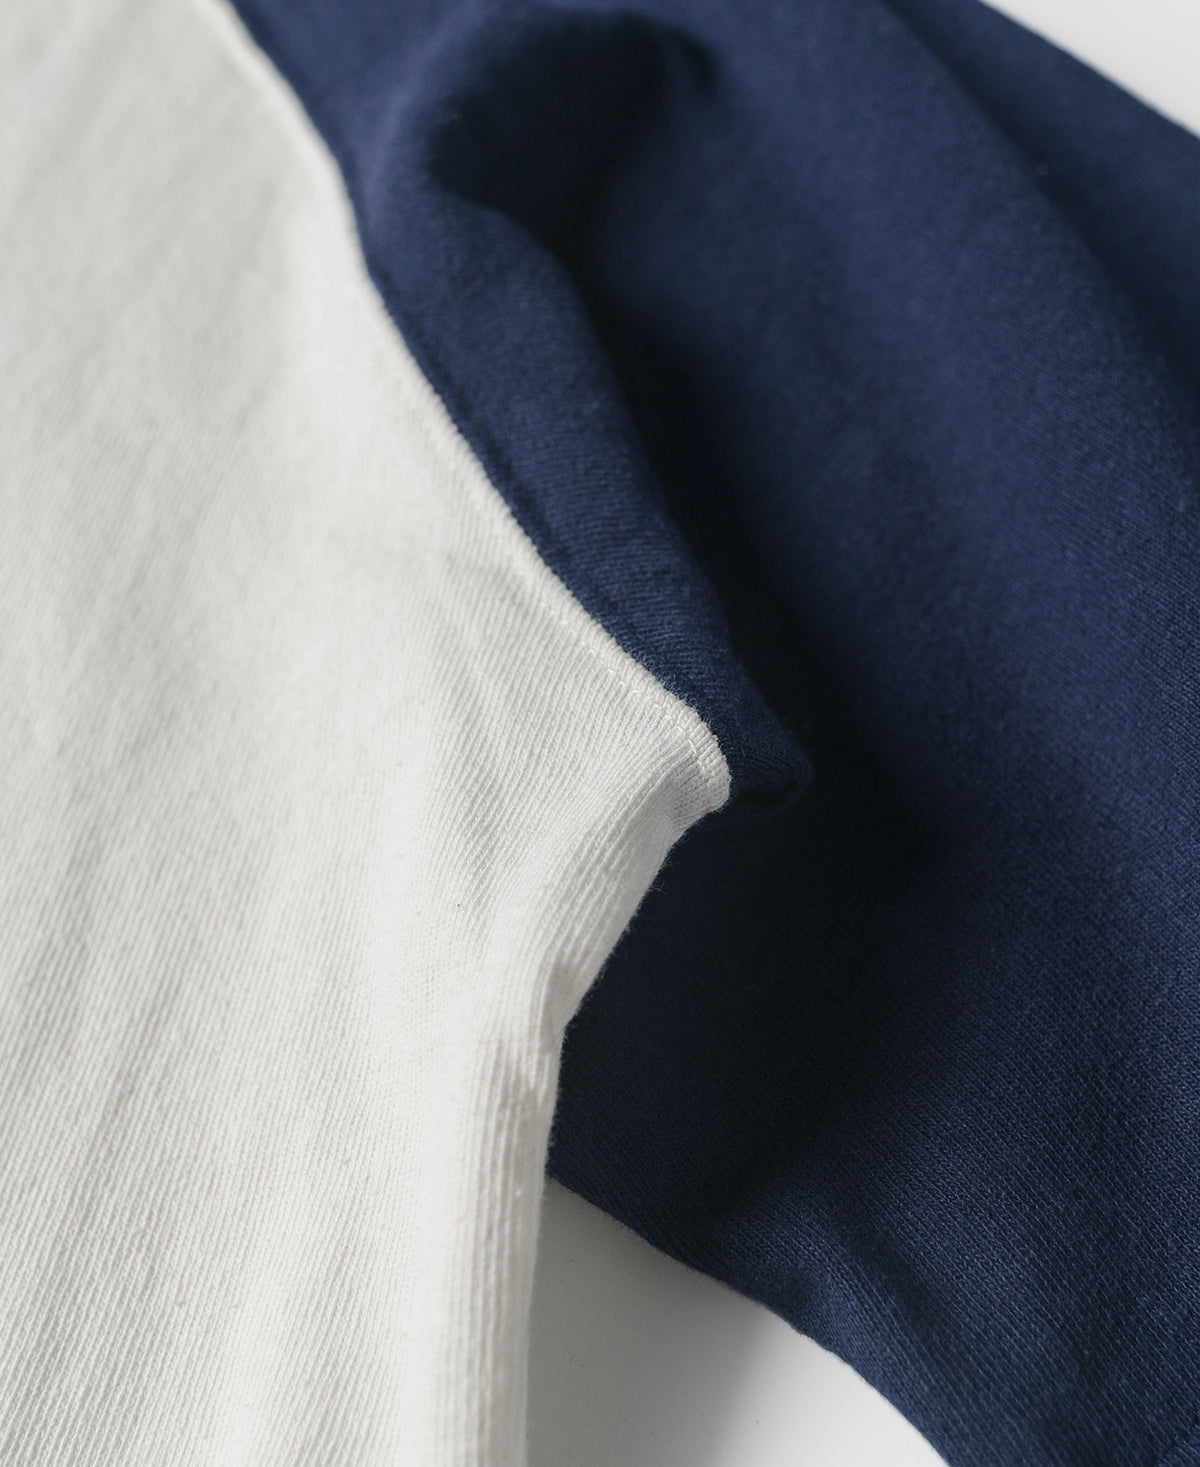 Two-Tone Rider Printed Raglan Sleeve T-Shirt - Blue/White